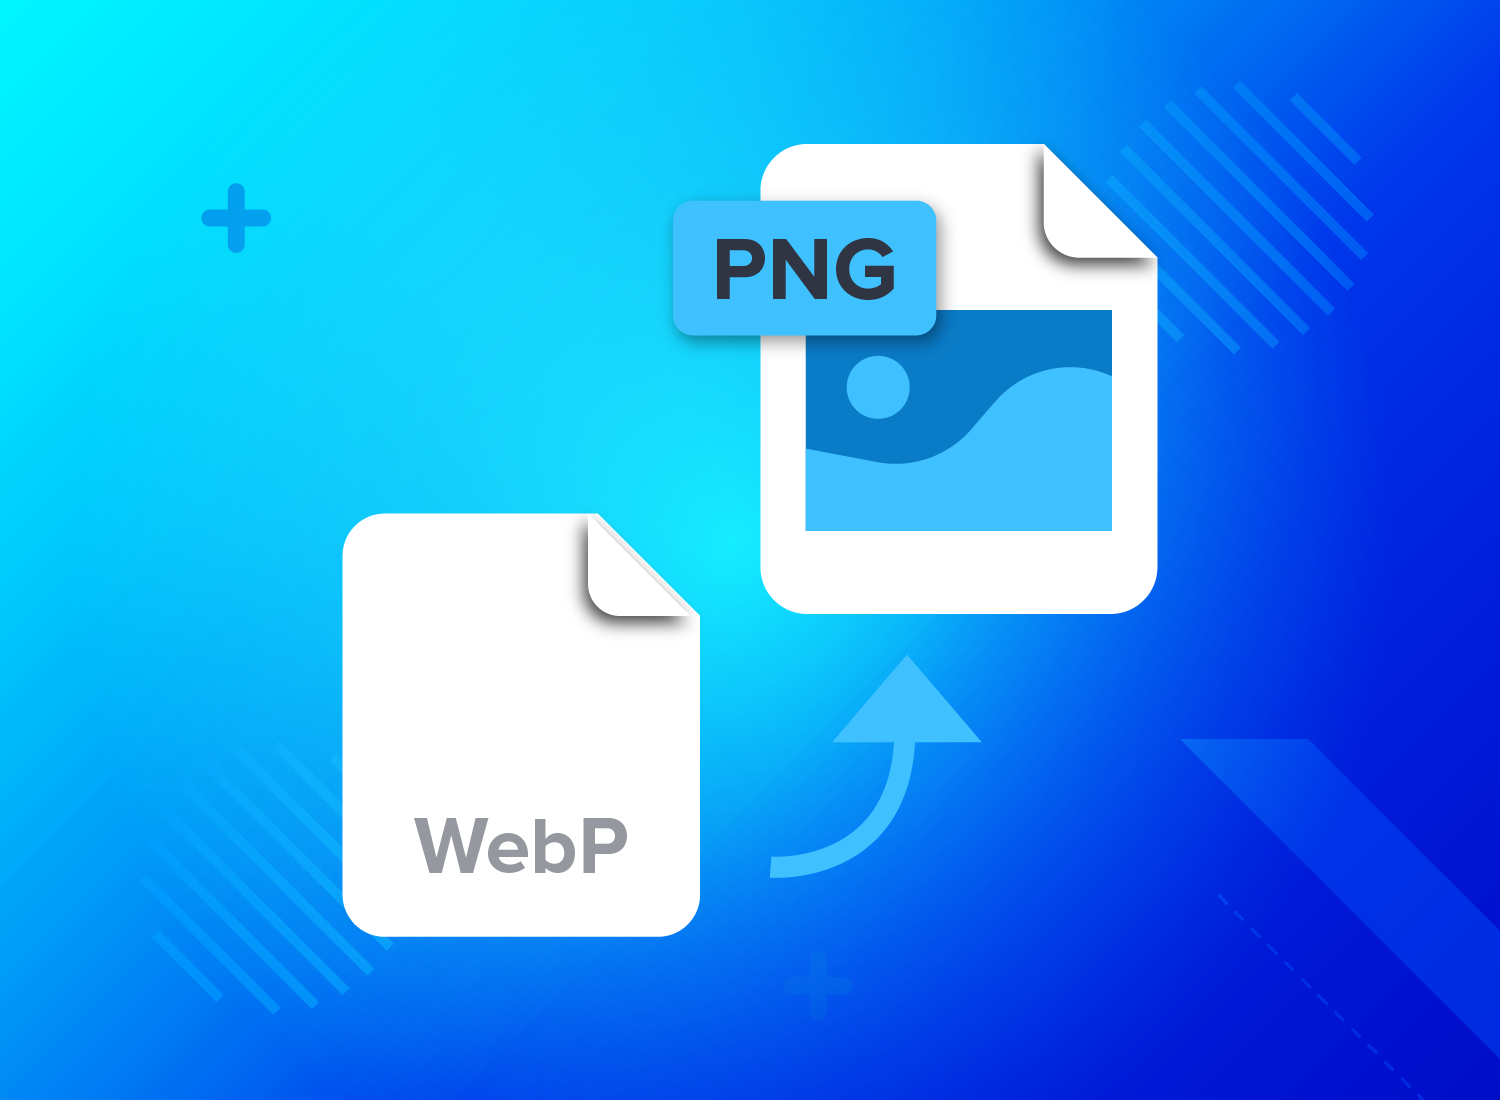 WebP to PNG conversion process